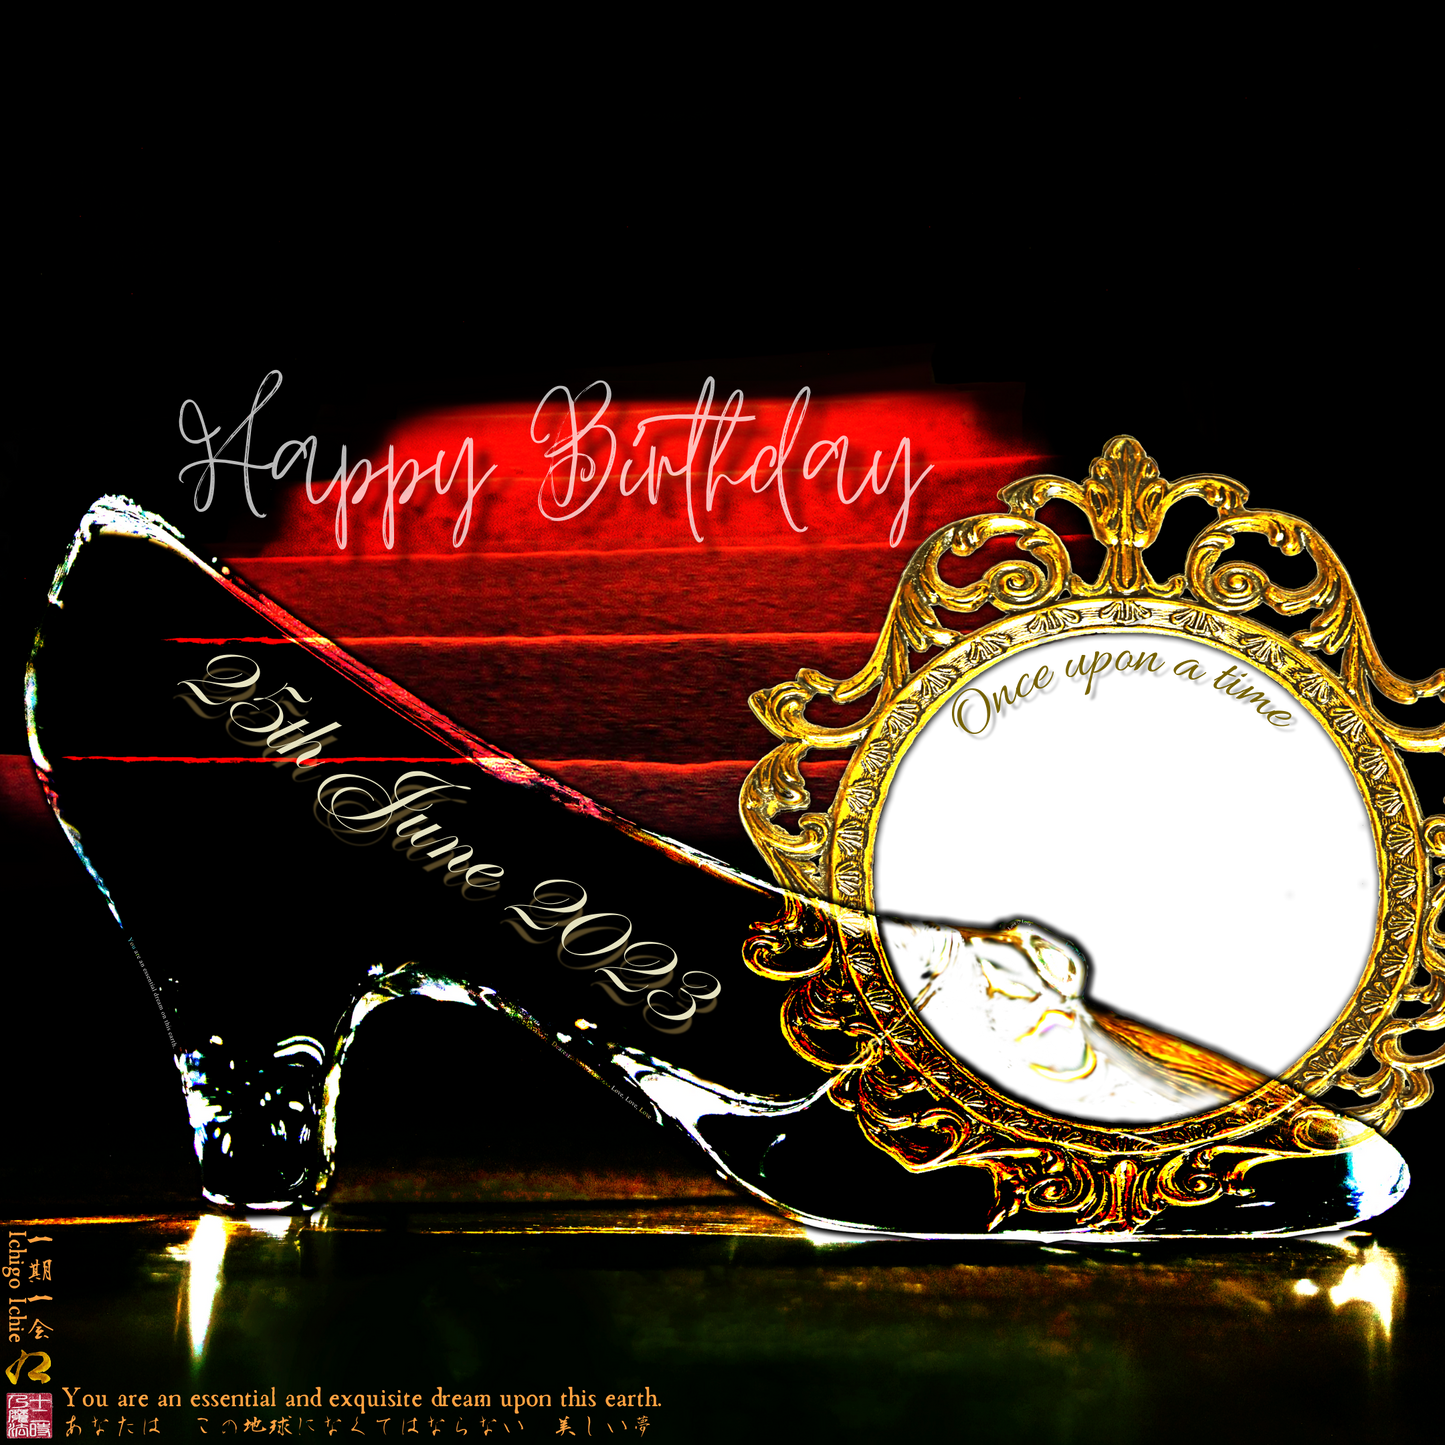 Happy Birthday Glass Slipper "Ichigo Ichie" 25th June 2023 the Right (1-of-1) NFT Art